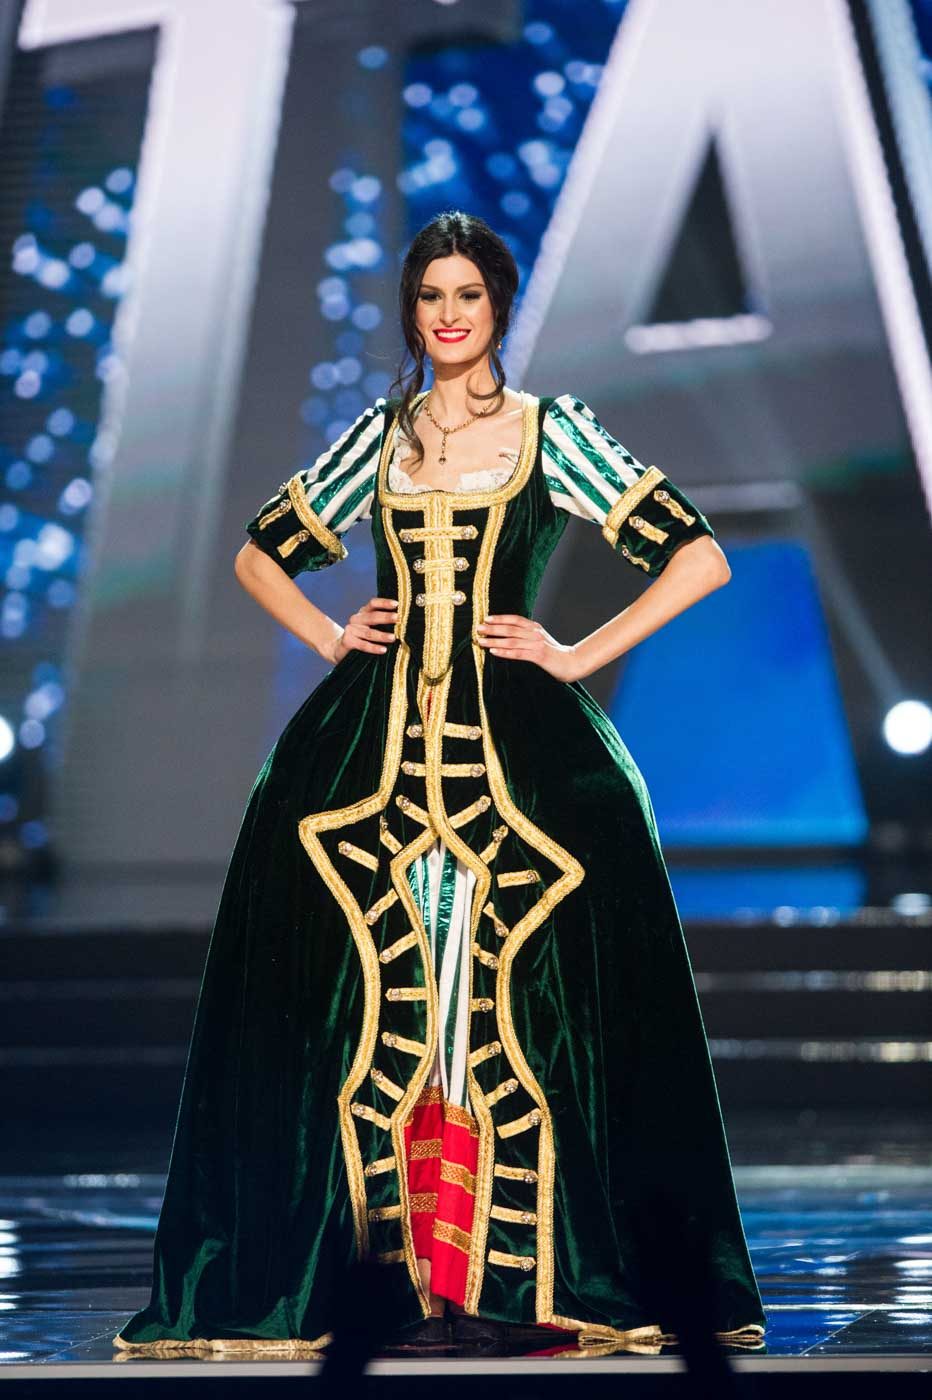 Sophia Sergio, Miss Italy 2016 